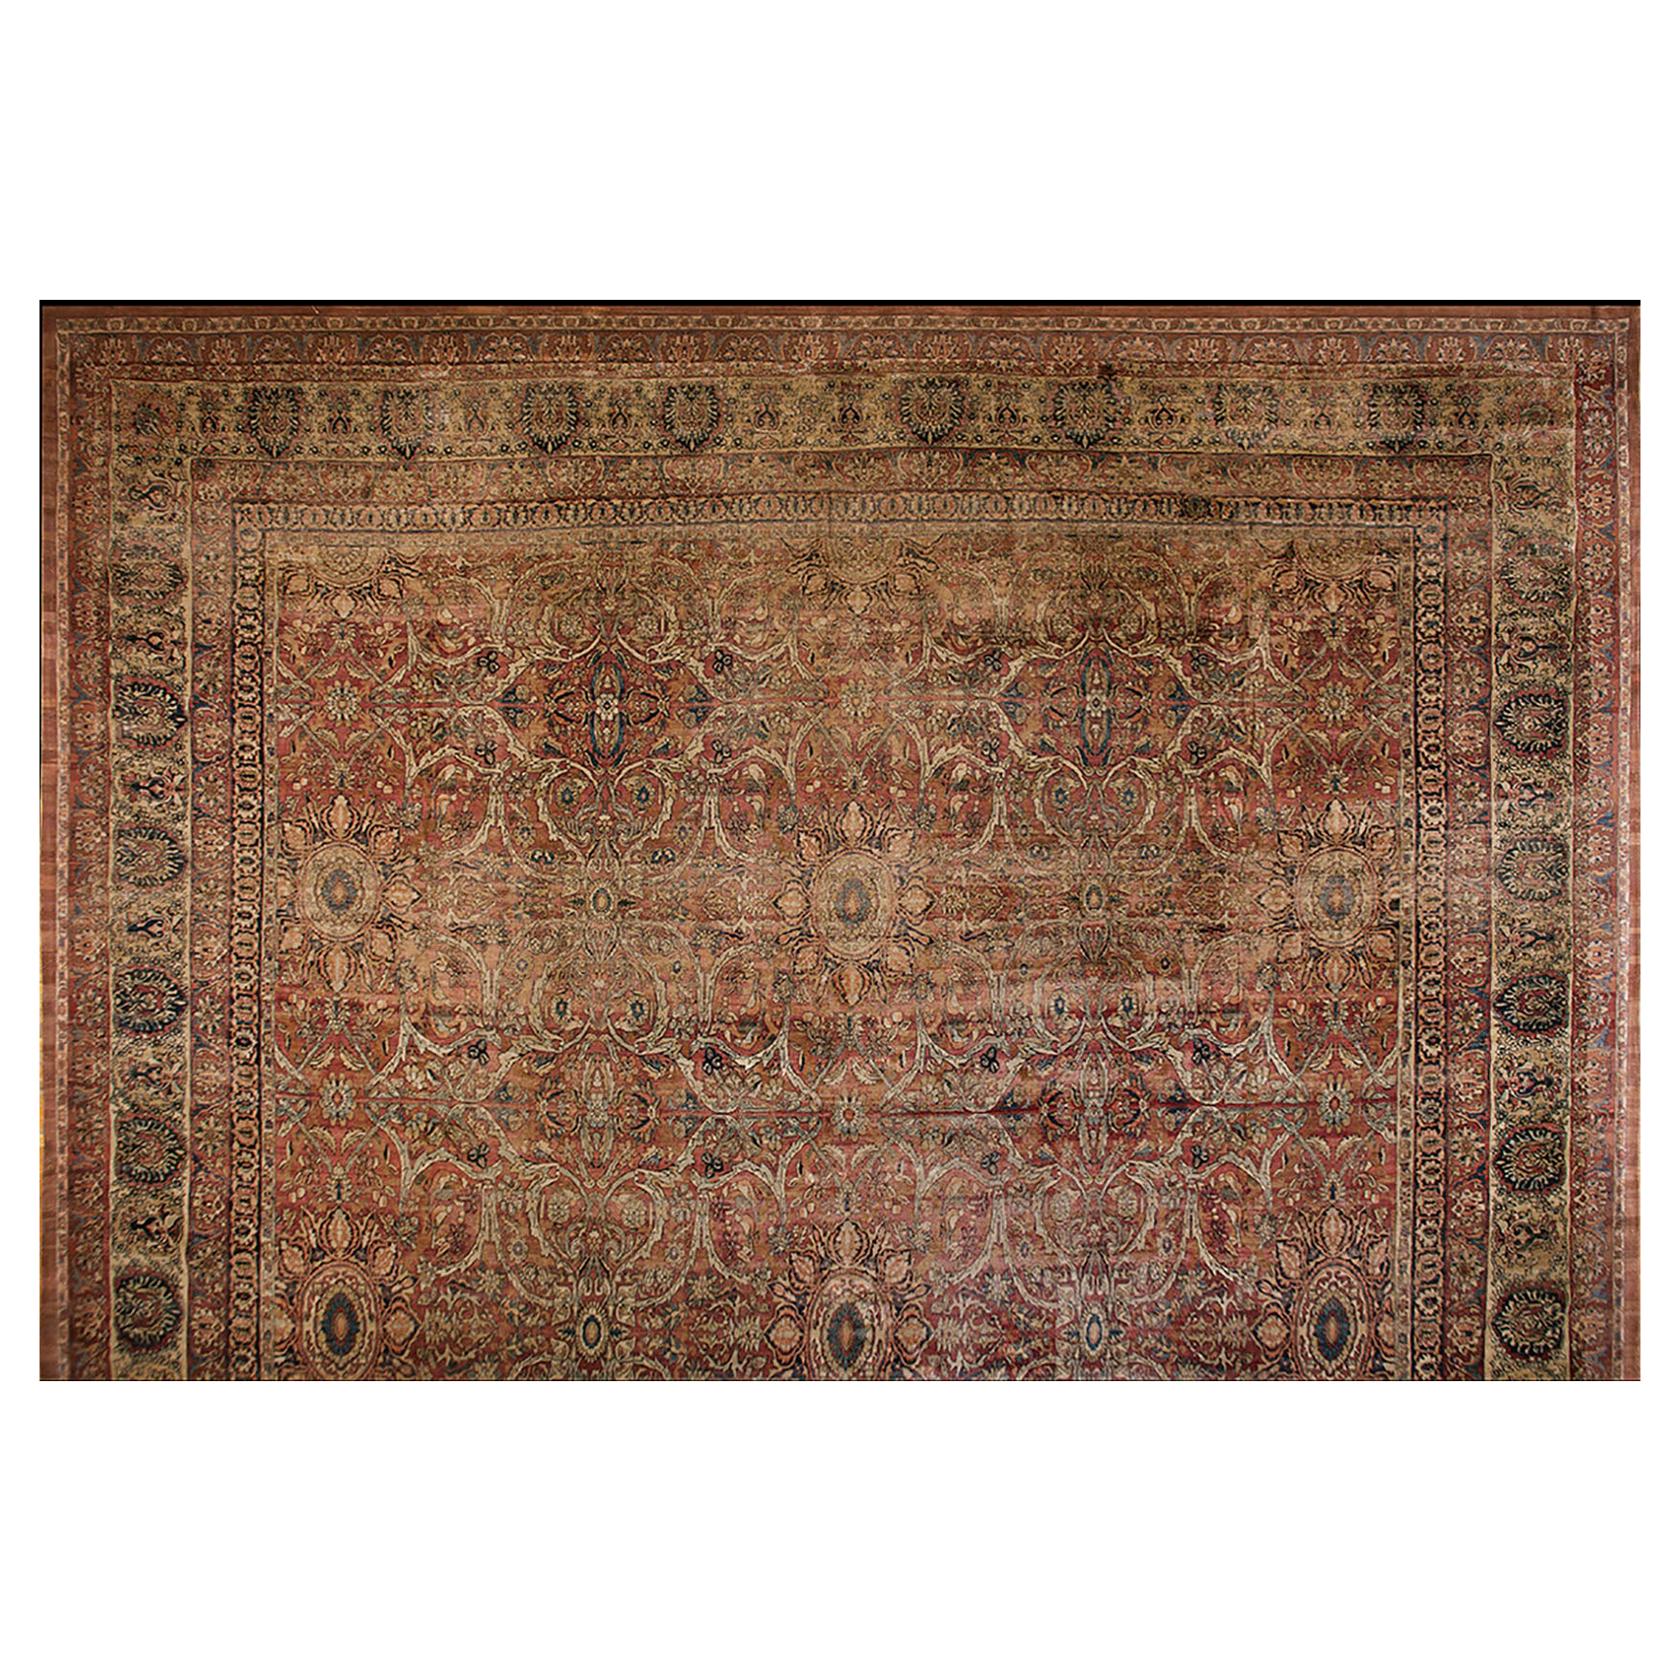 19th Century Persian Kerman Laver Carpet ( 21' x 28' - 640 x 853 )